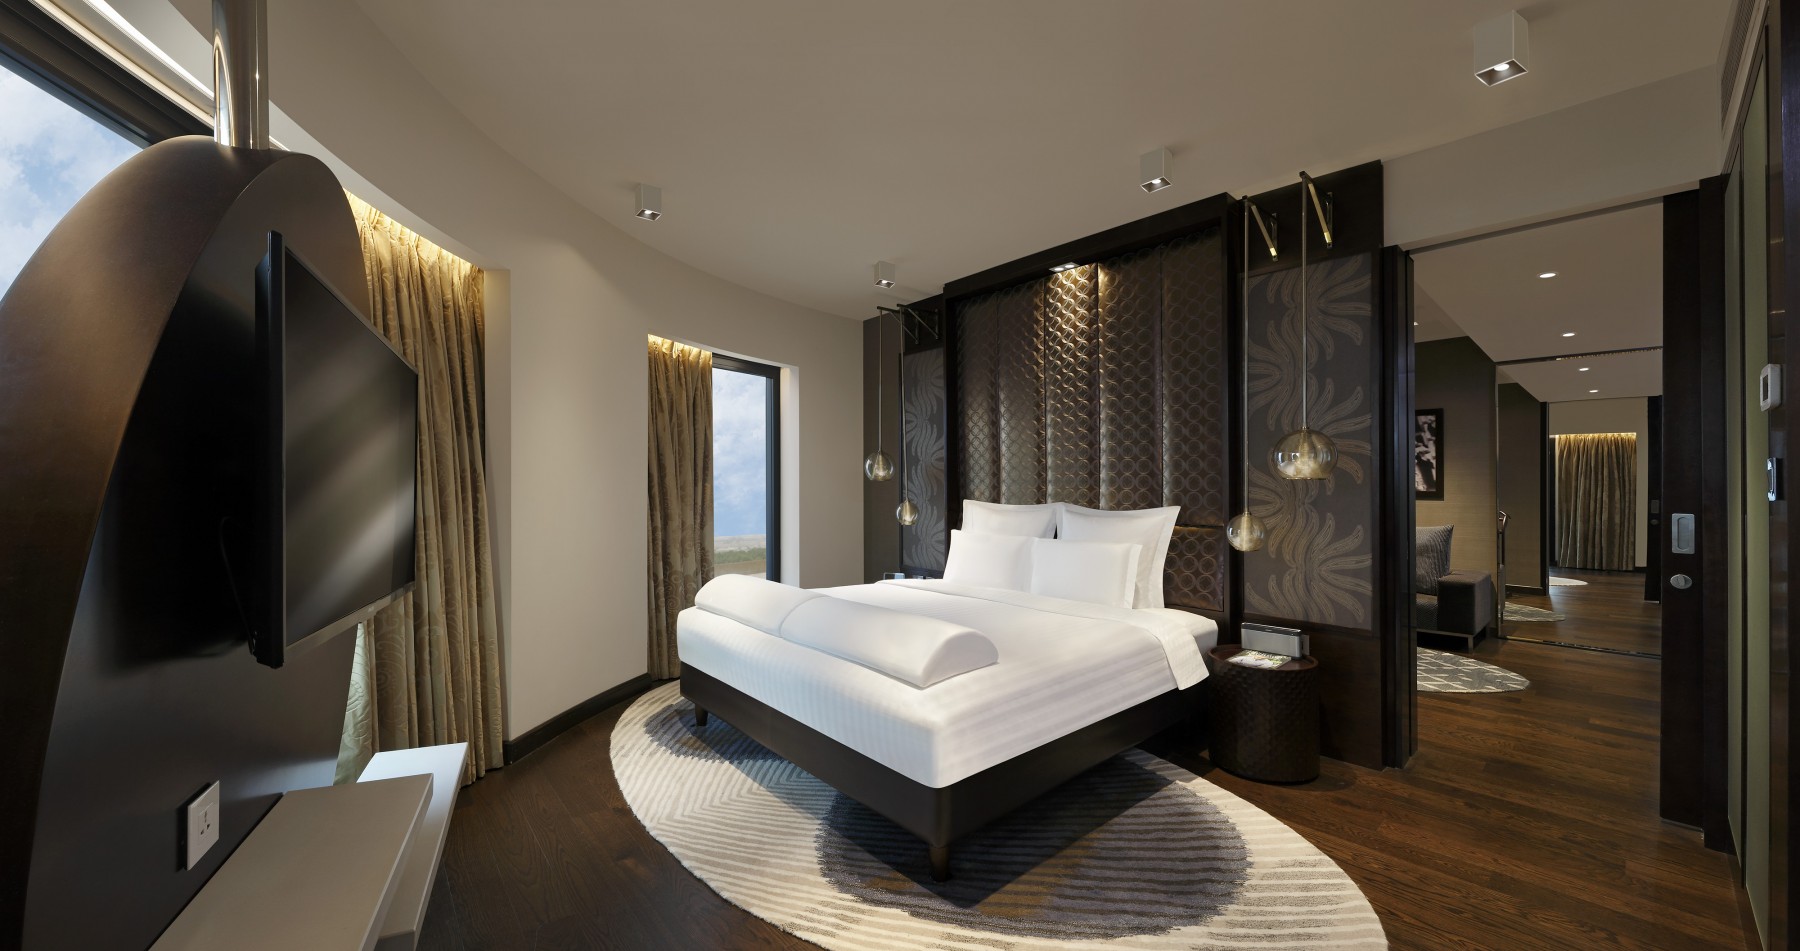 Hotel Suites in Los Angeles - Hotel Rooms | The Ritz-Carlton, Los Angeles